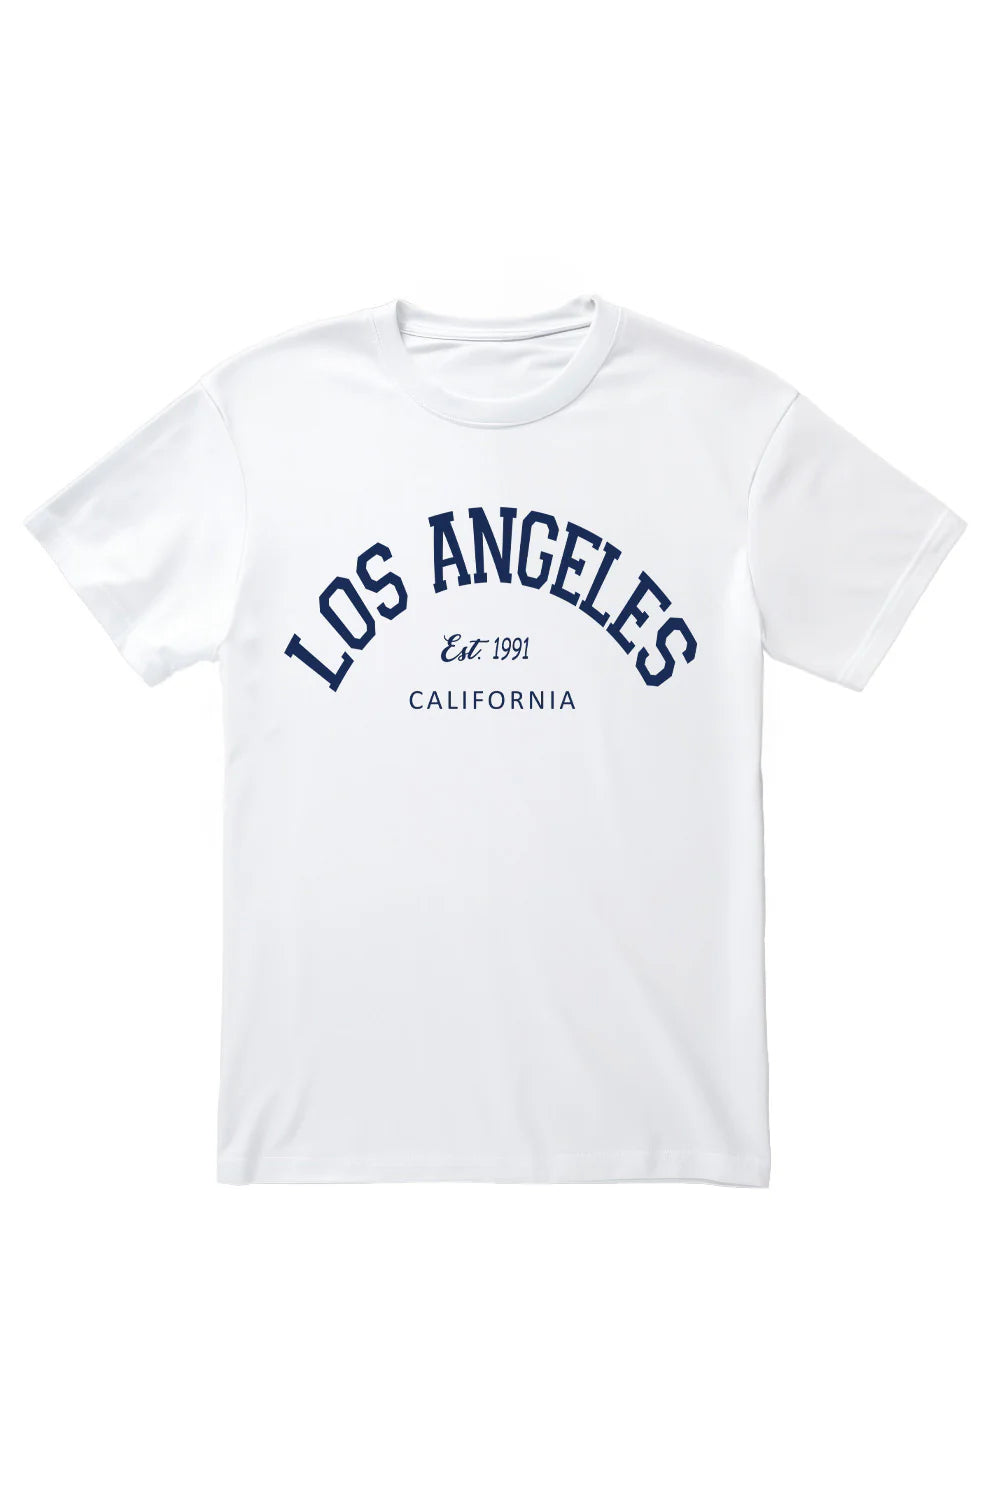 Los Angeles  California T-Shirt